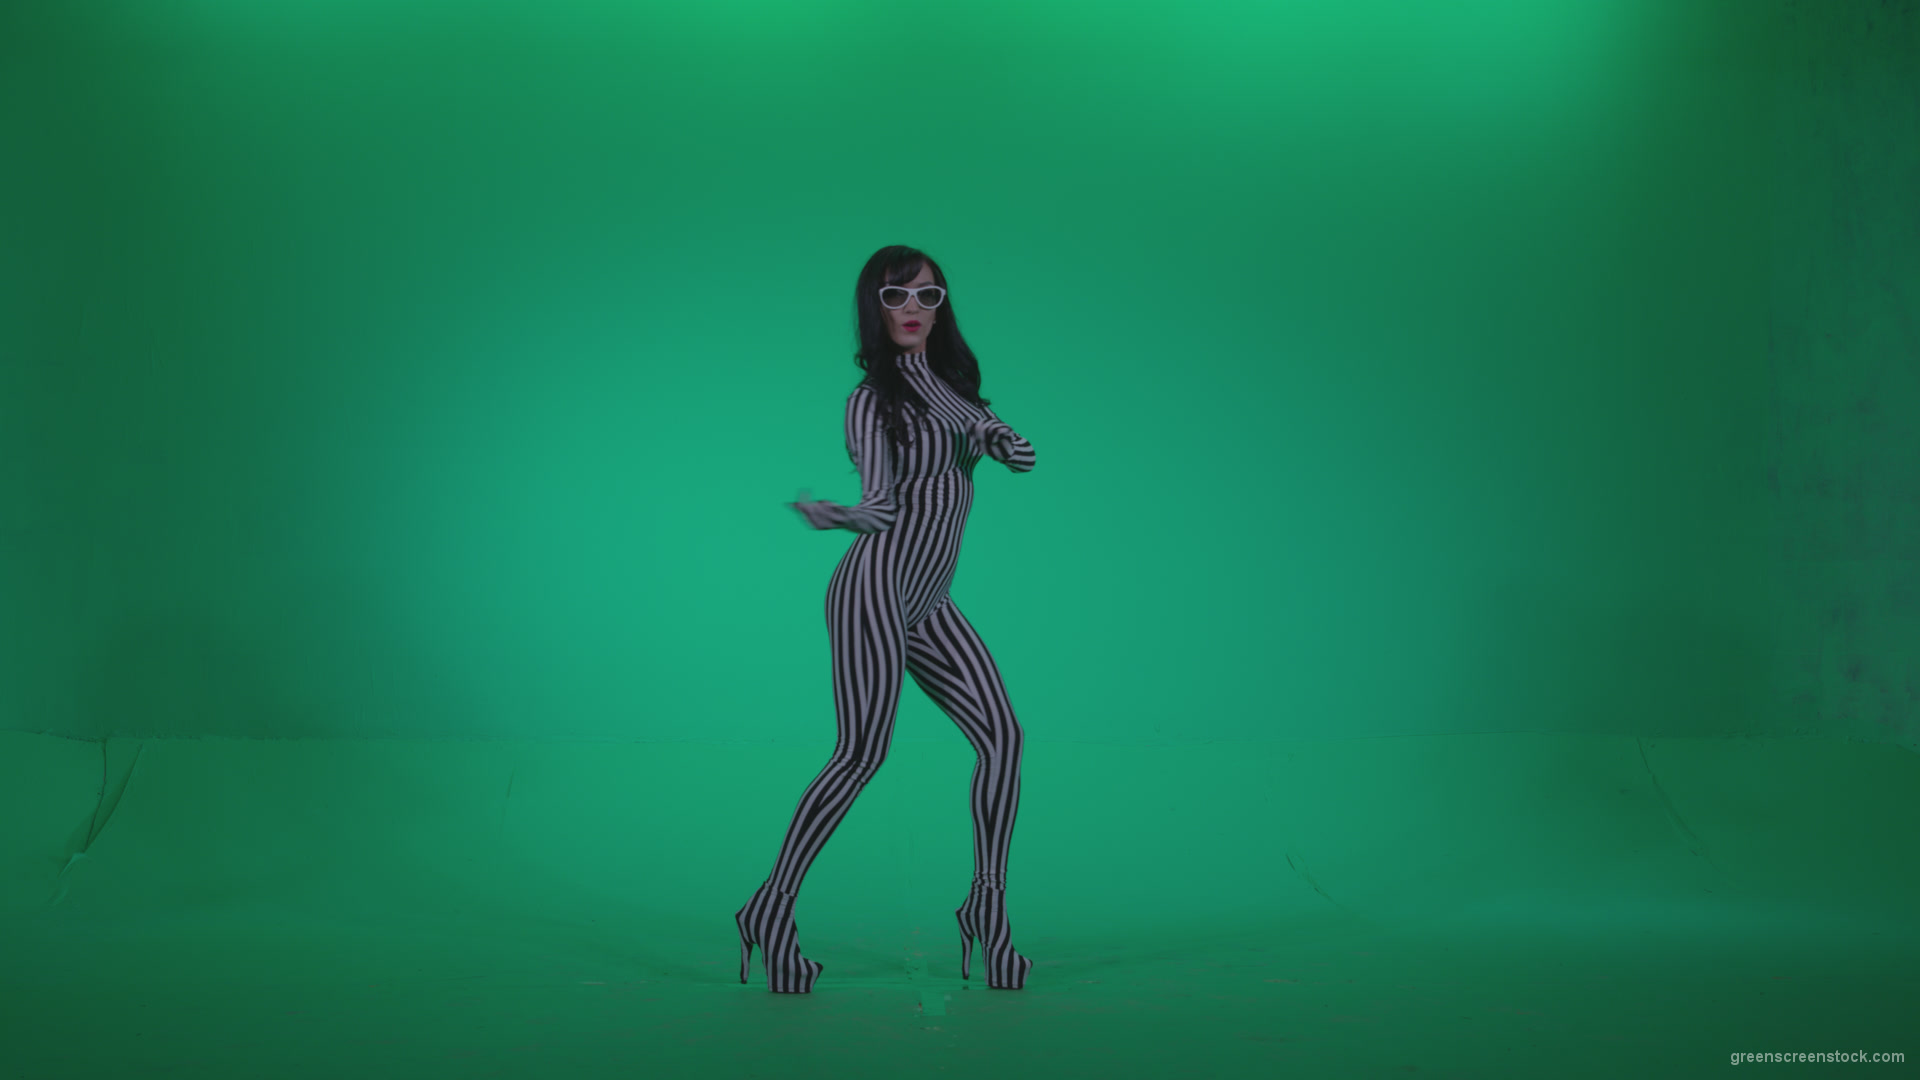 Go-go-Dancer-White-Stripes-s10-Green-Screen-Video-Footage_007 Green Screen Stock